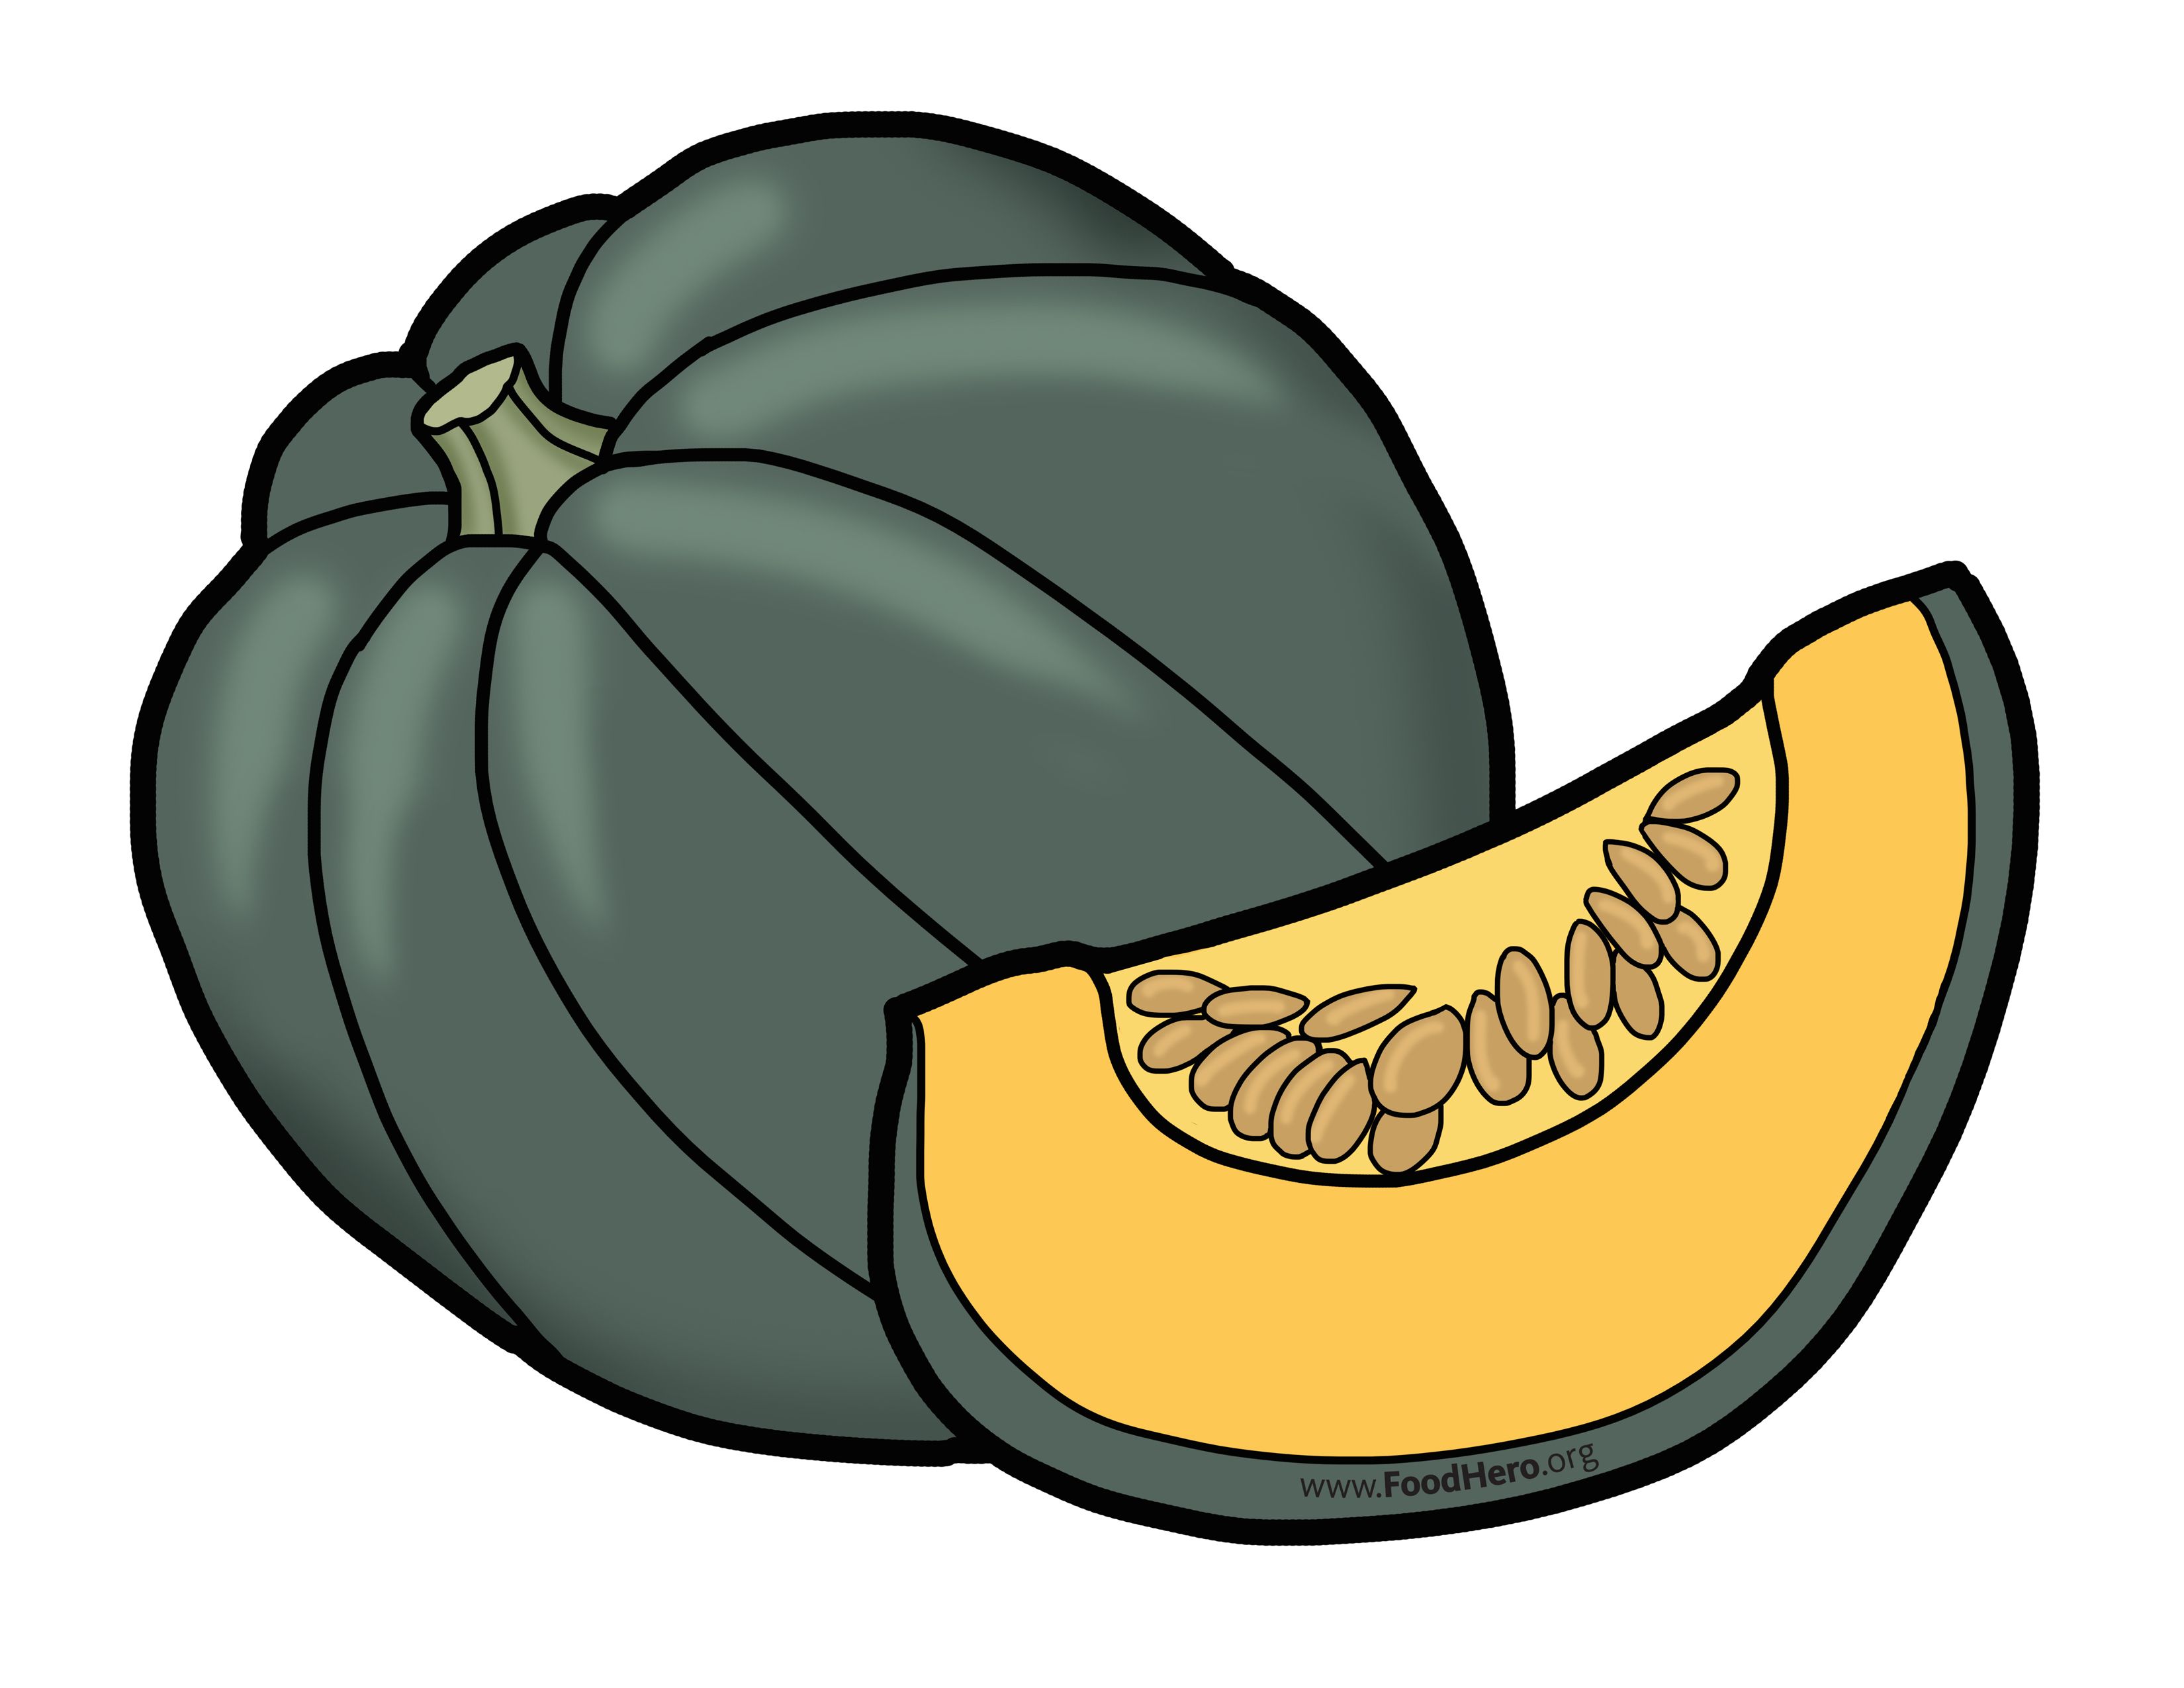 Illustration found at foodhero.org. #schoolart #acornsquash.